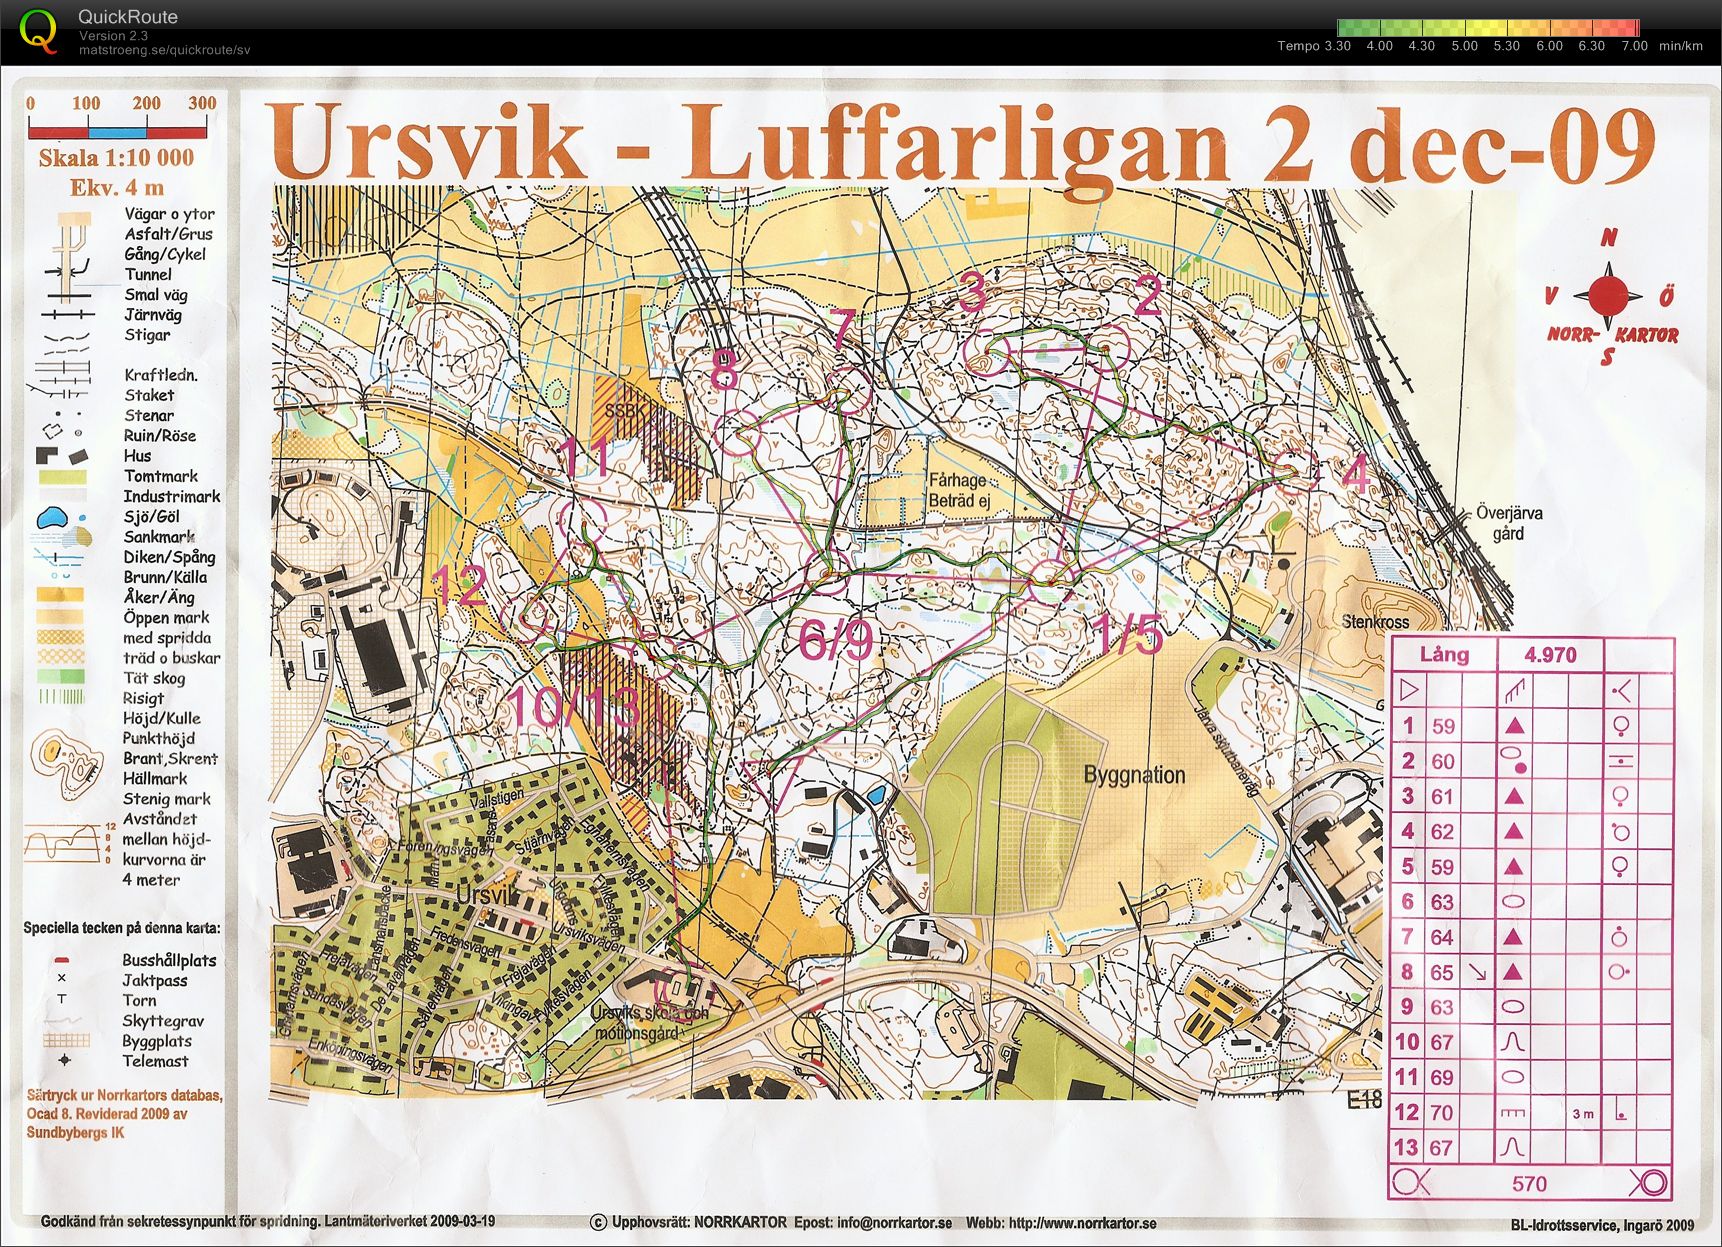 Luffarligan Ursvik (02-12-2009)